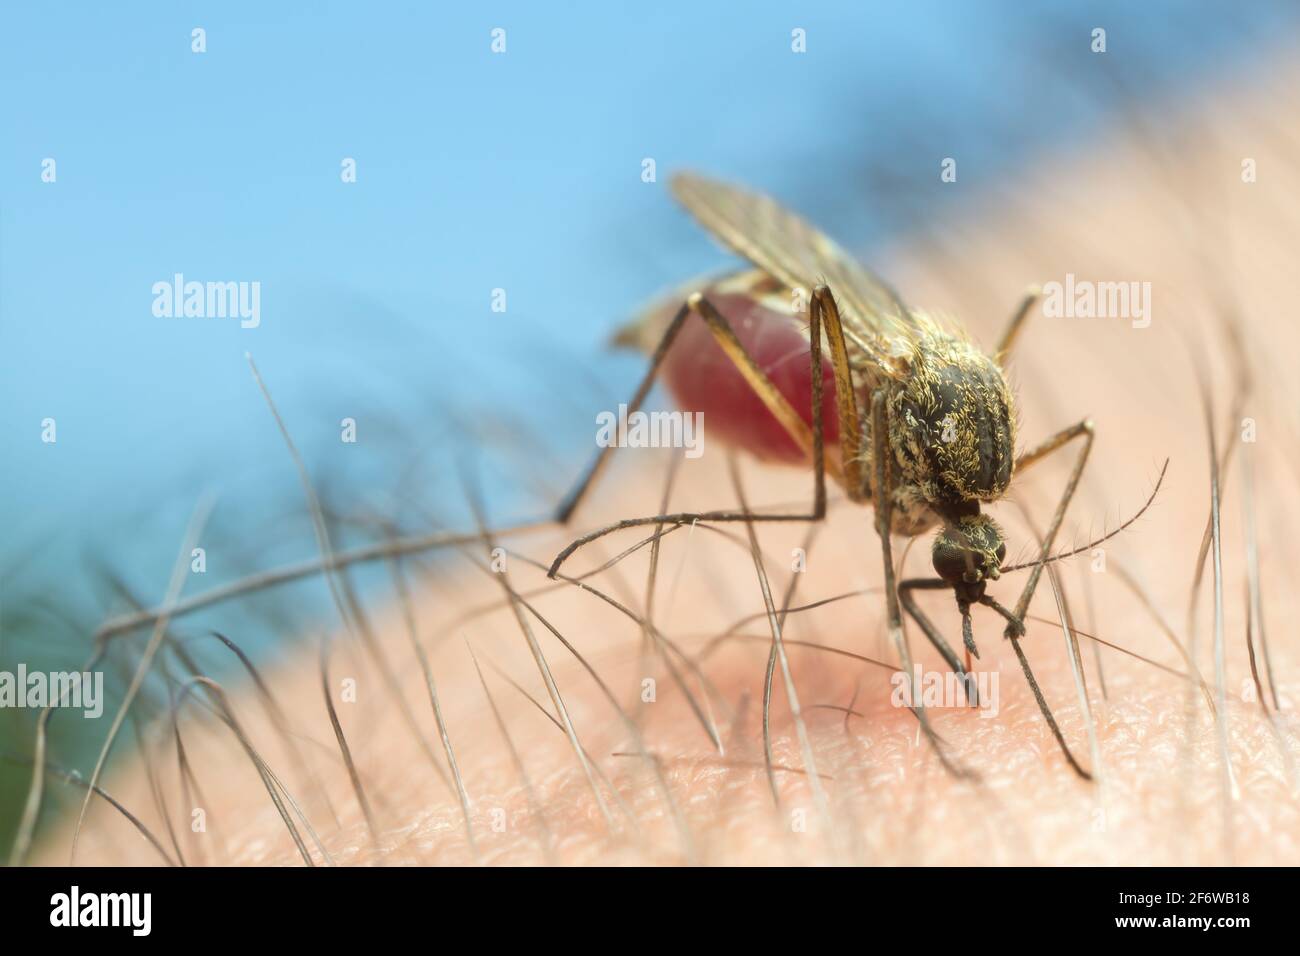 zanzara femmina che succhia sangue da umano Foto Stock